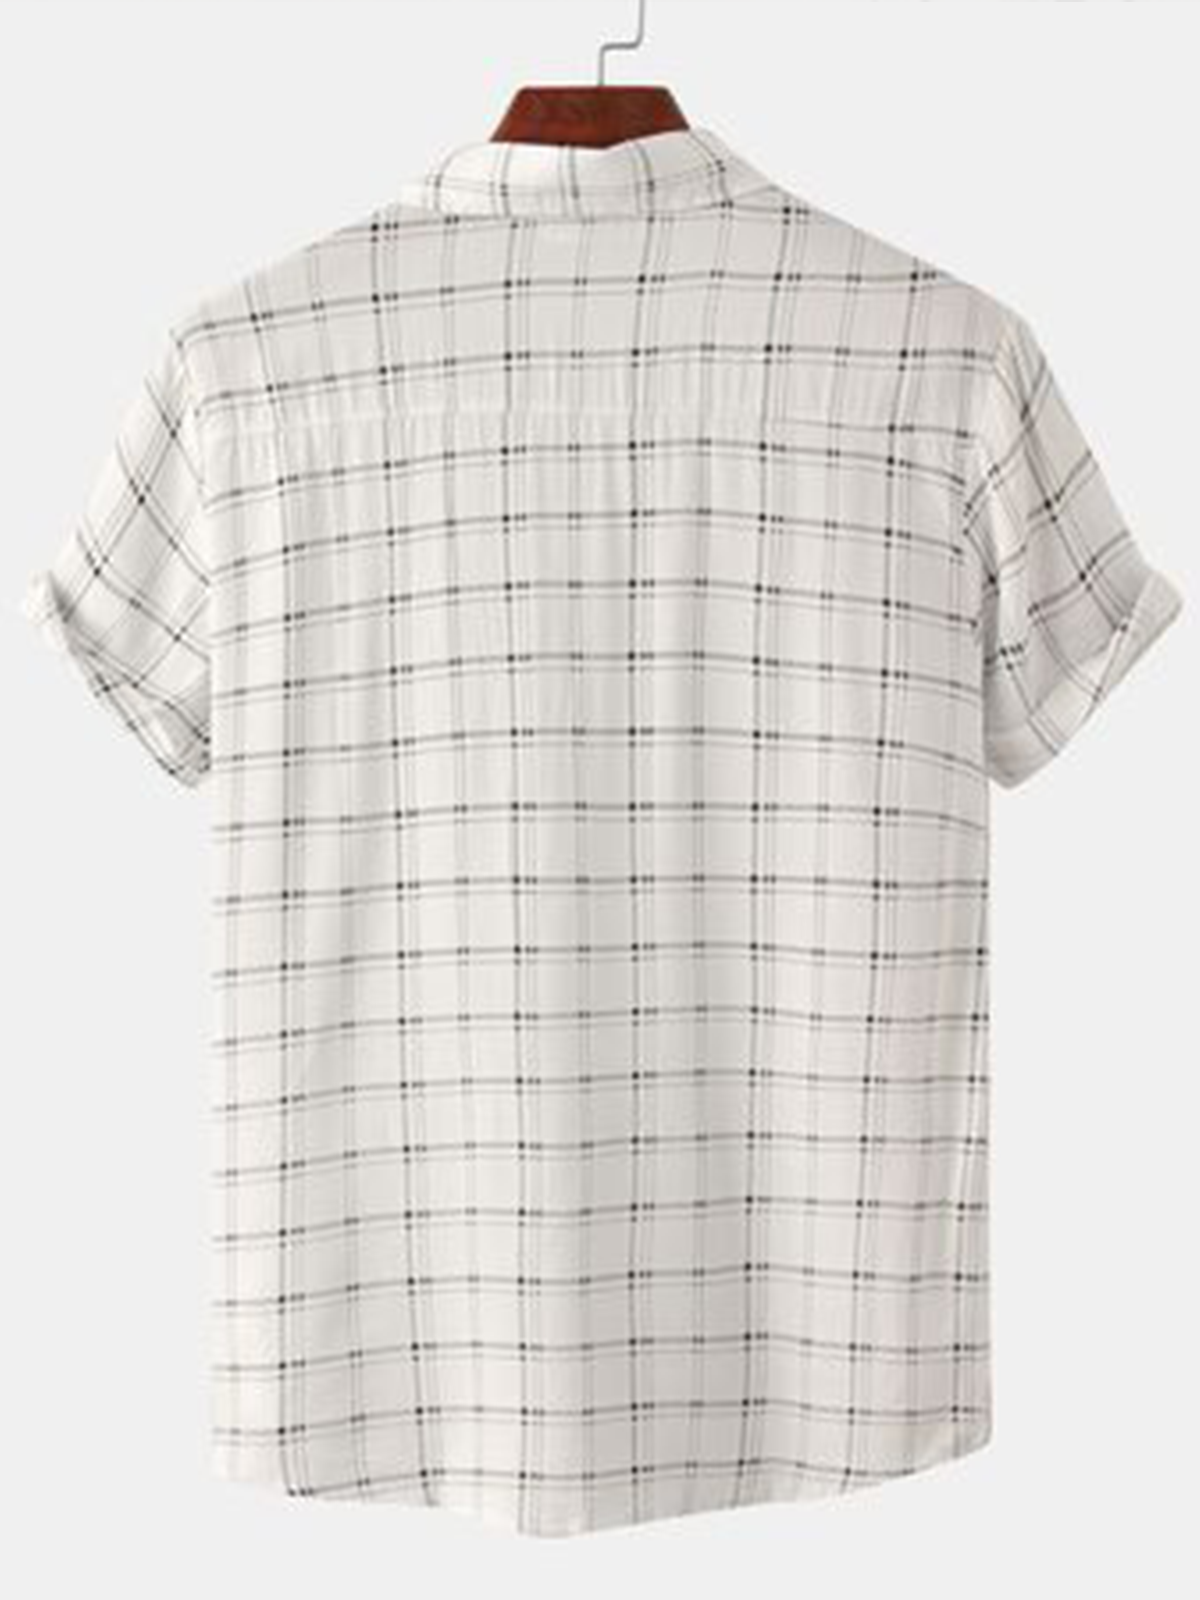 Men's Casual Basic Striped Plaid Versatile Shirt